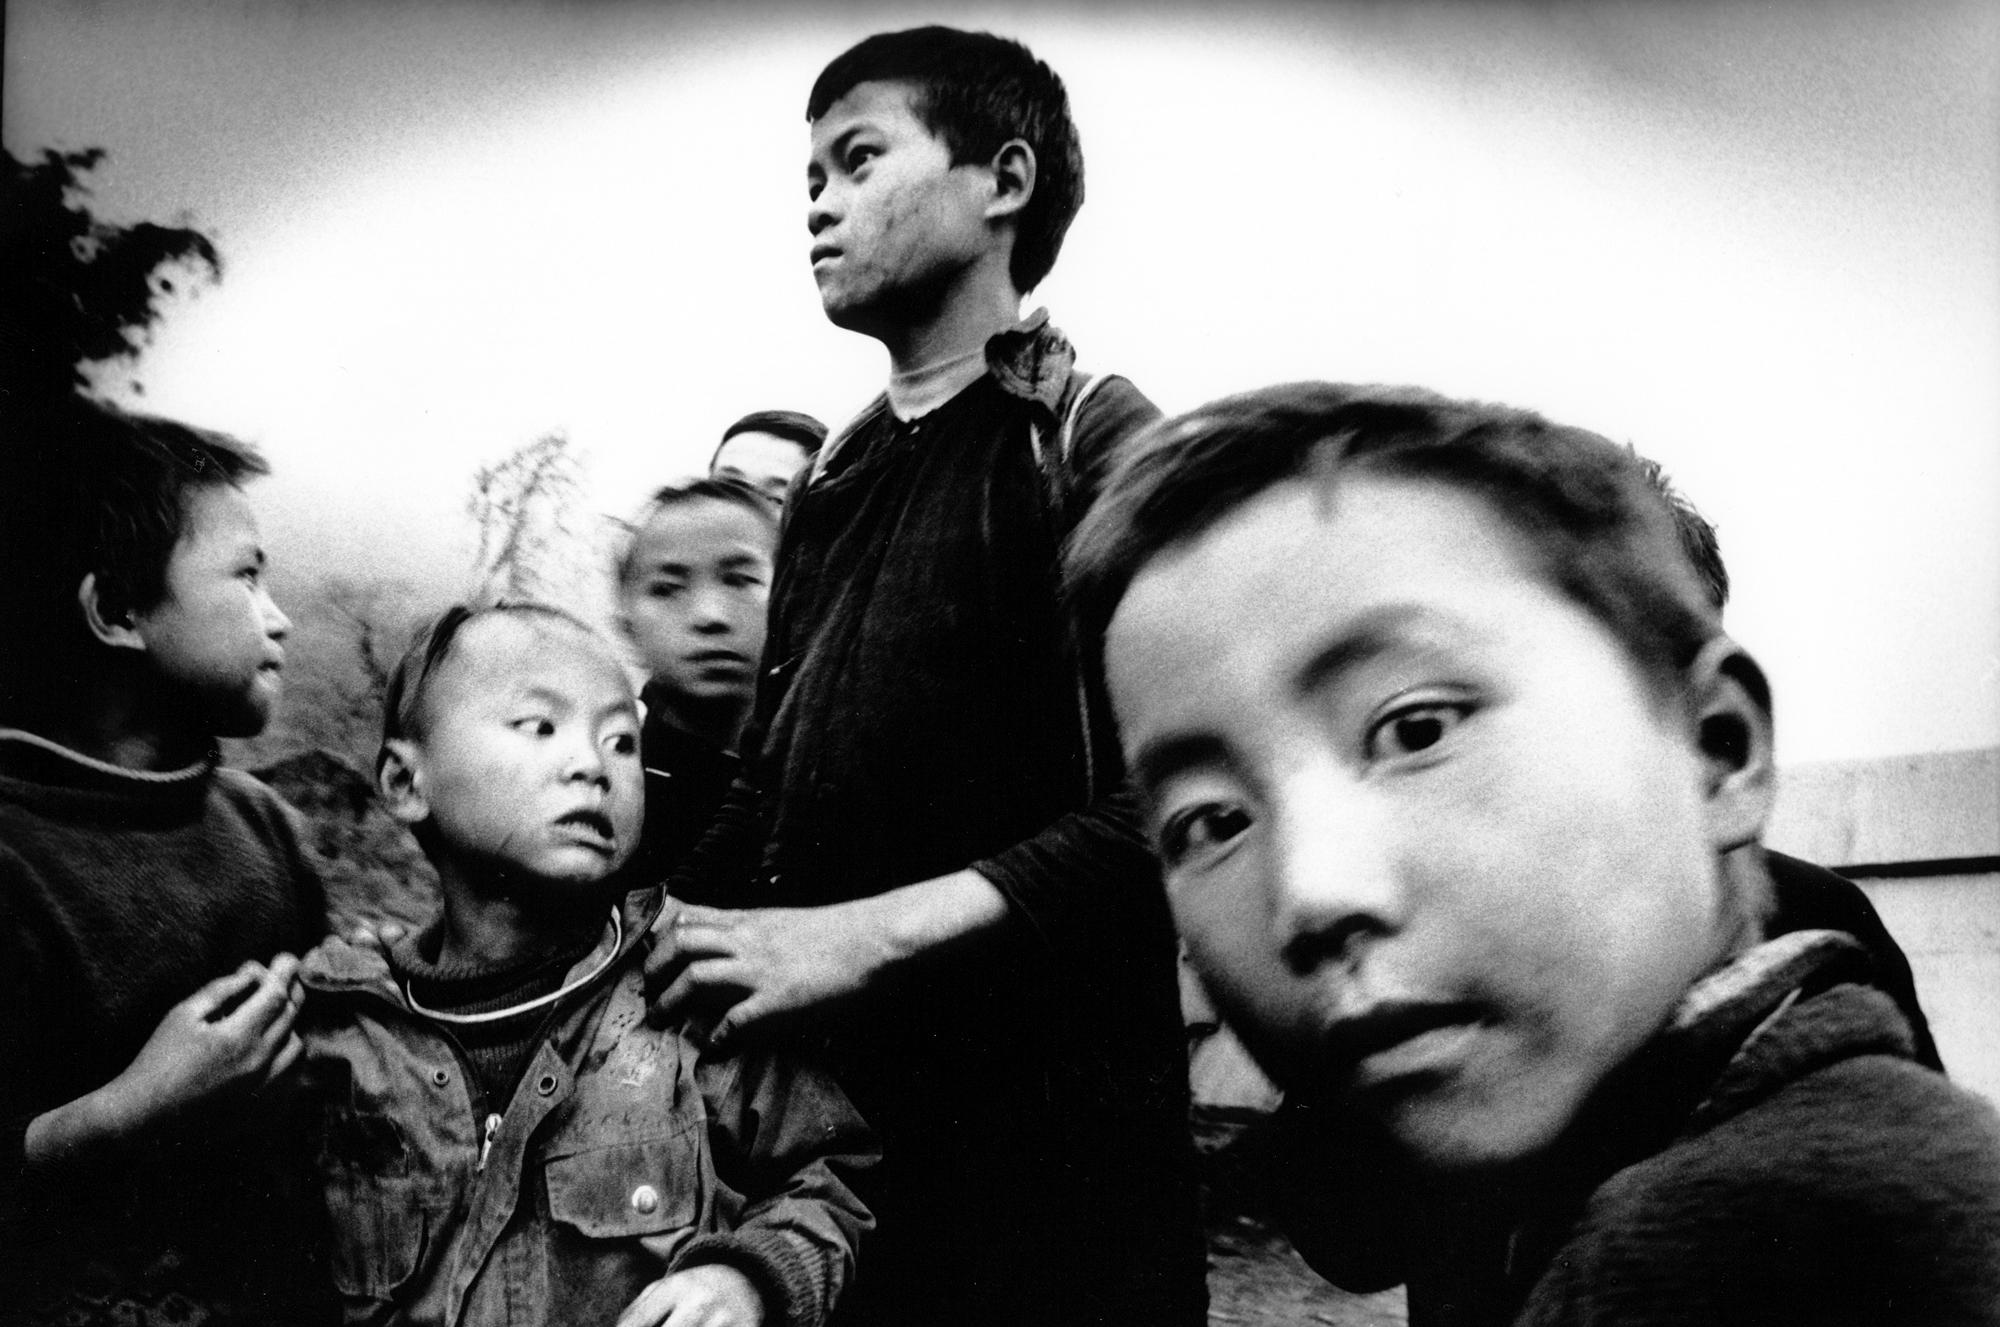 Children of the mist - Black Hmong, Vietnam, Sapa. December 2000. TheBlack Hmong...